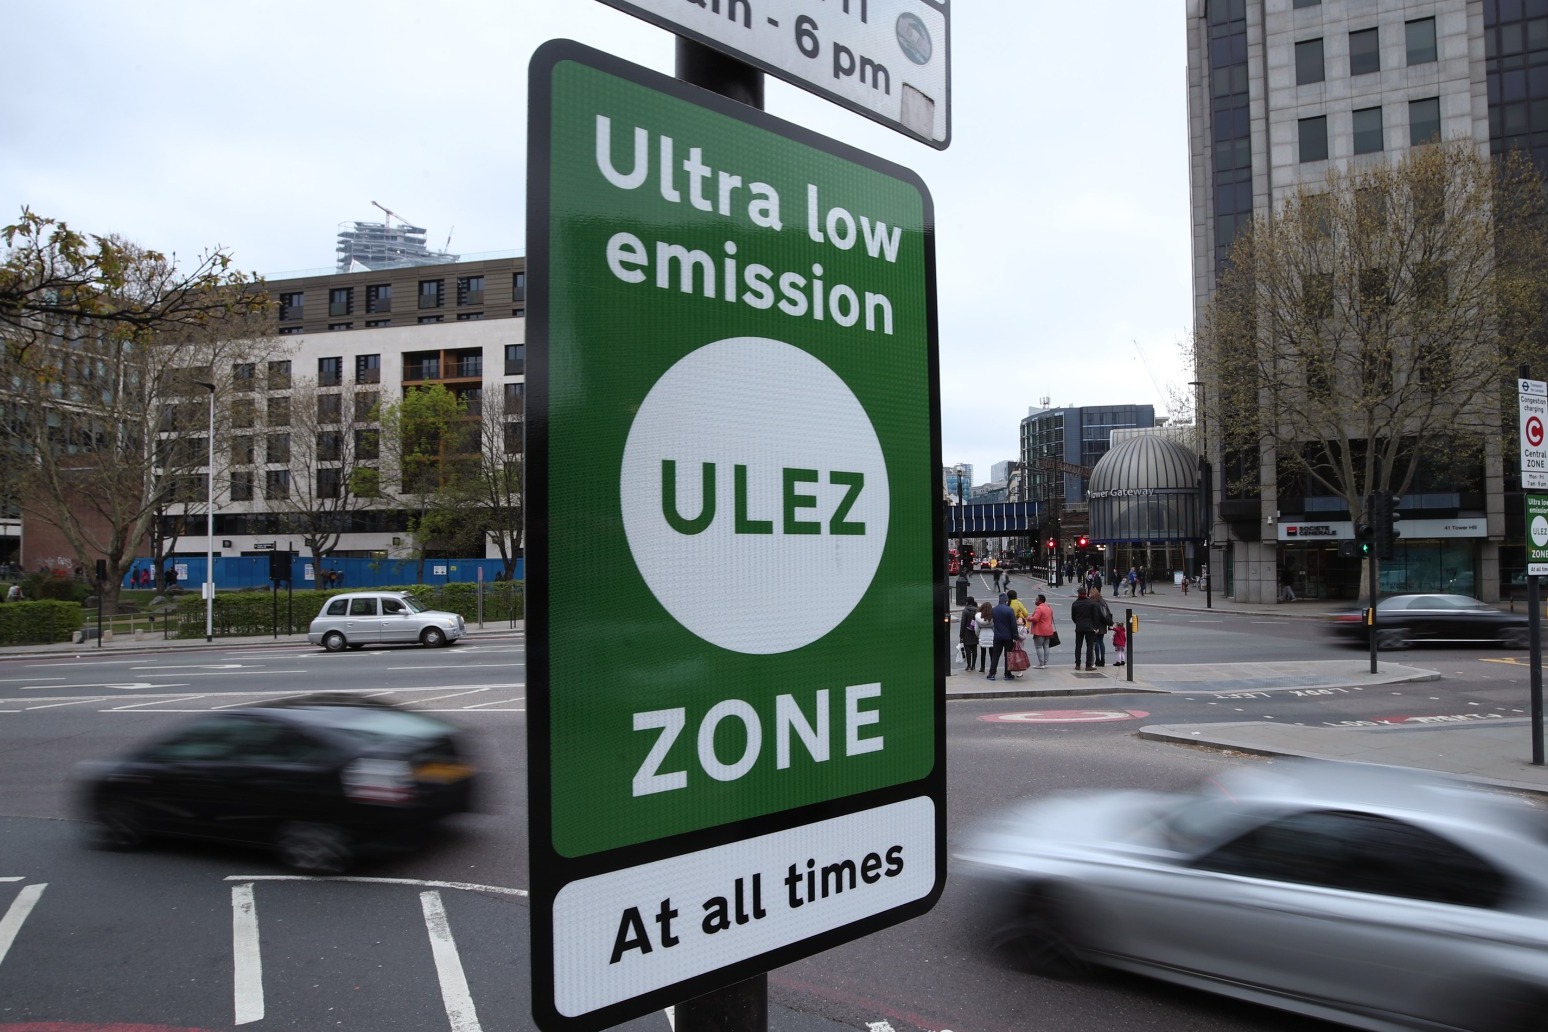 Sadiq Khan to expand ultra-low emission zone to whole of London 